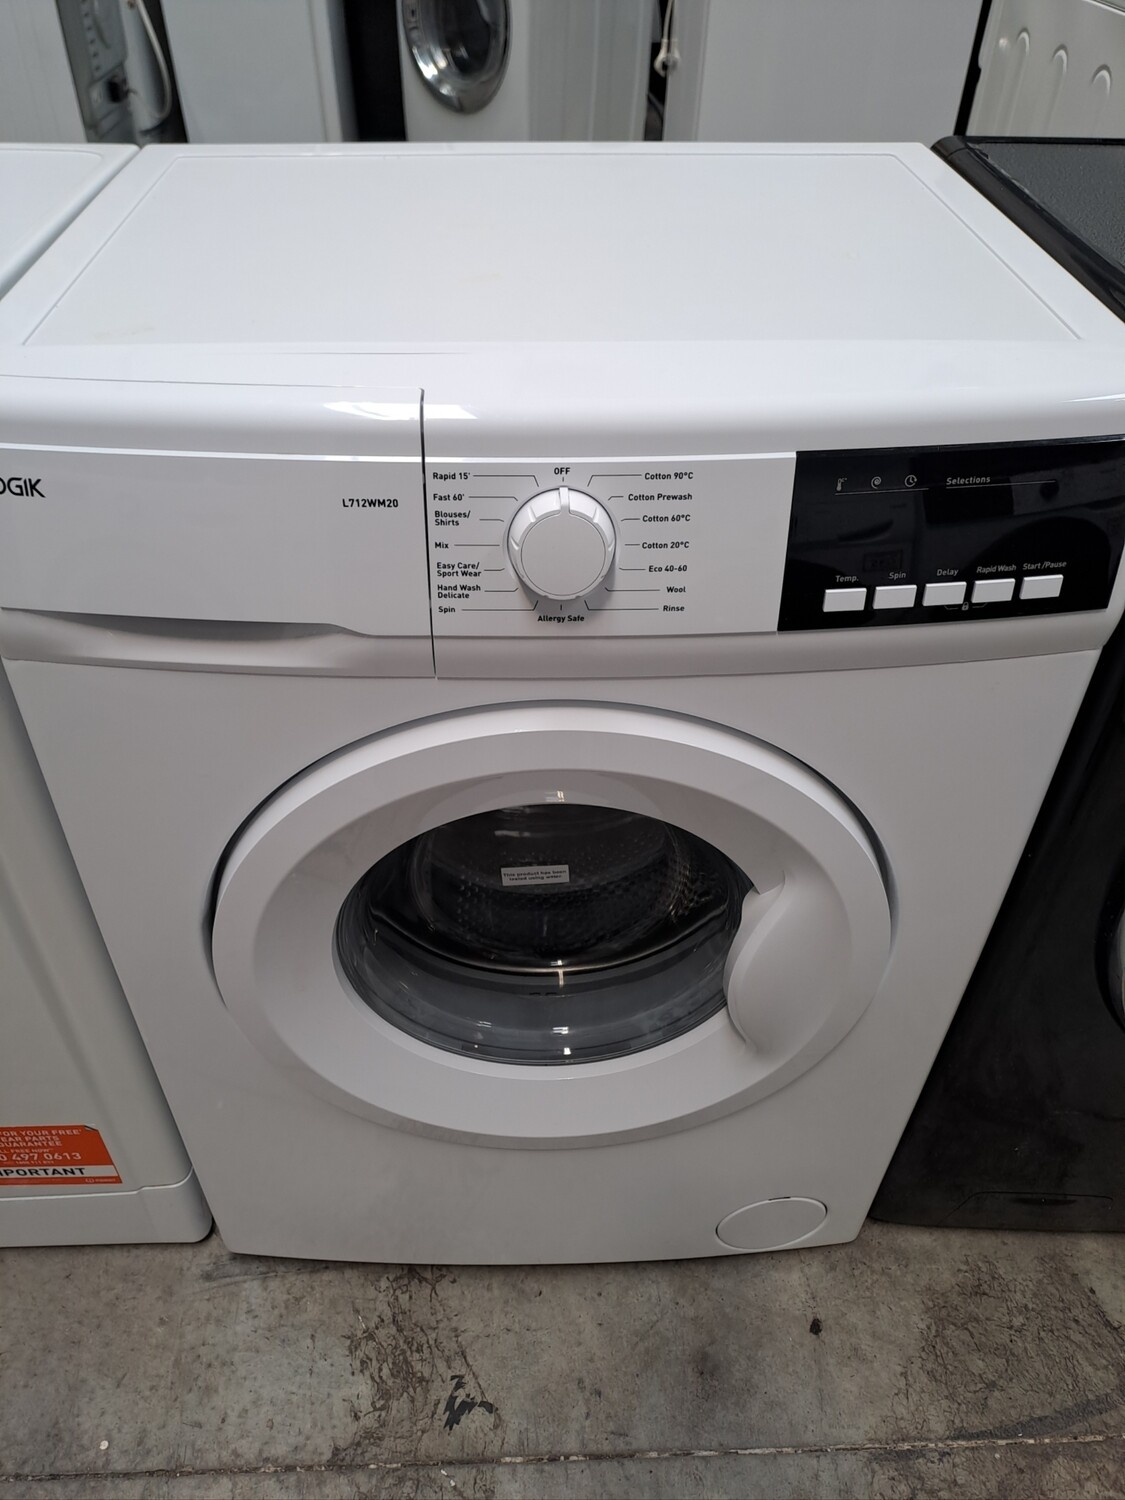 Logik L712WM20 7kg Load, 1200 Spin Washing Machine - White - New Graded - 12 Month Guarantee